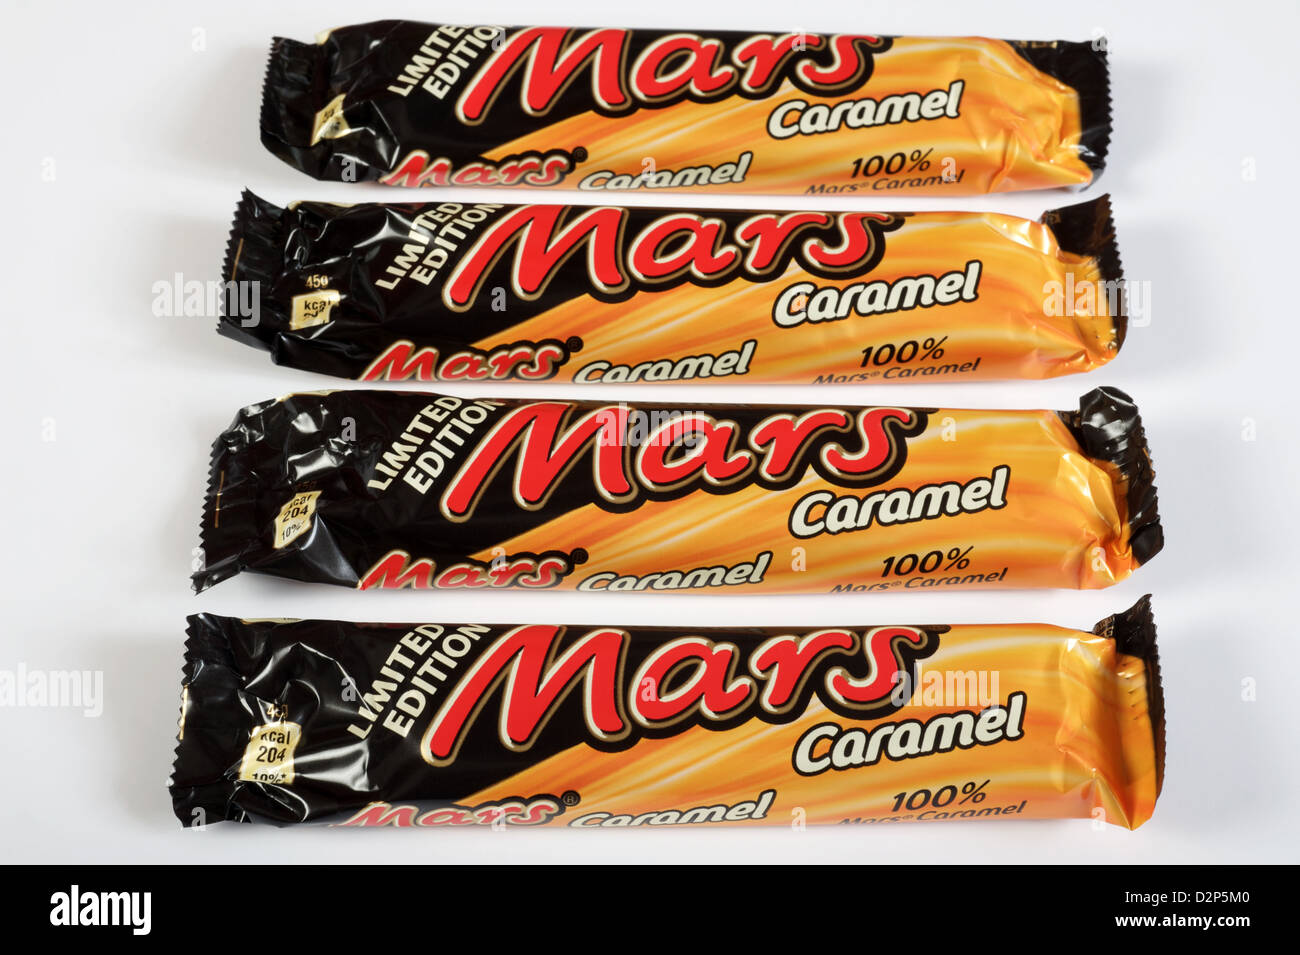 Limited edition Mars Caramel Stock Photo